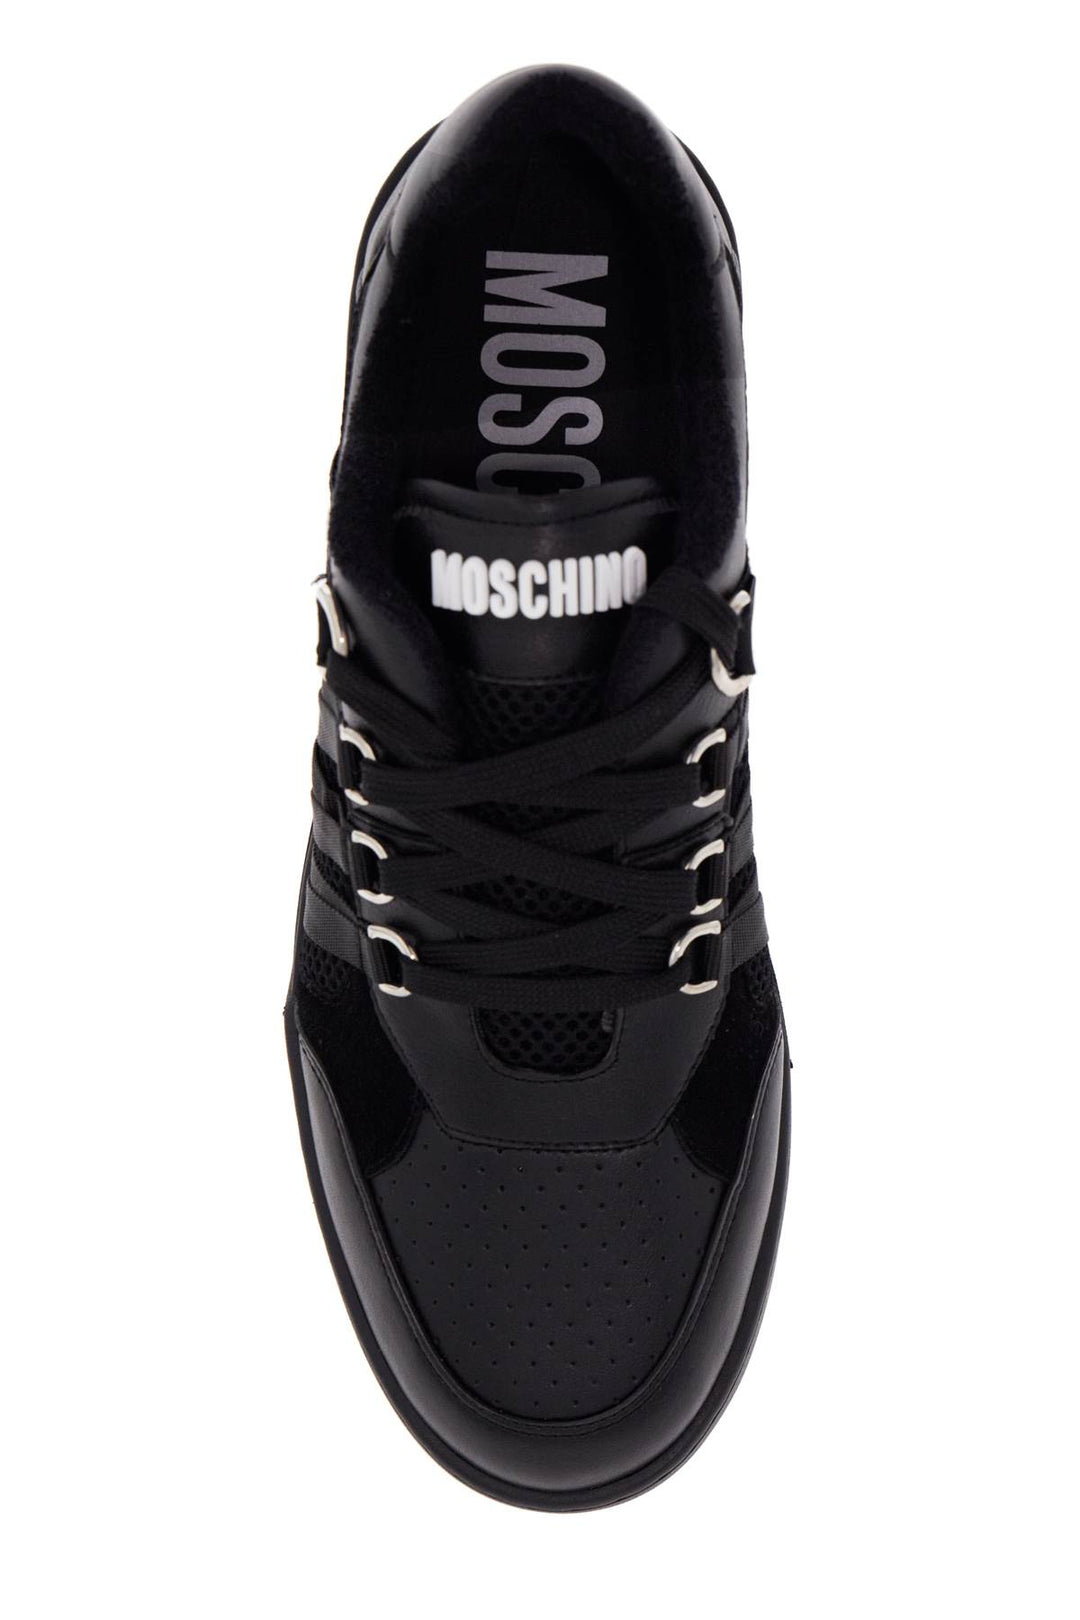 Moschino Streetball Sneakers   Black